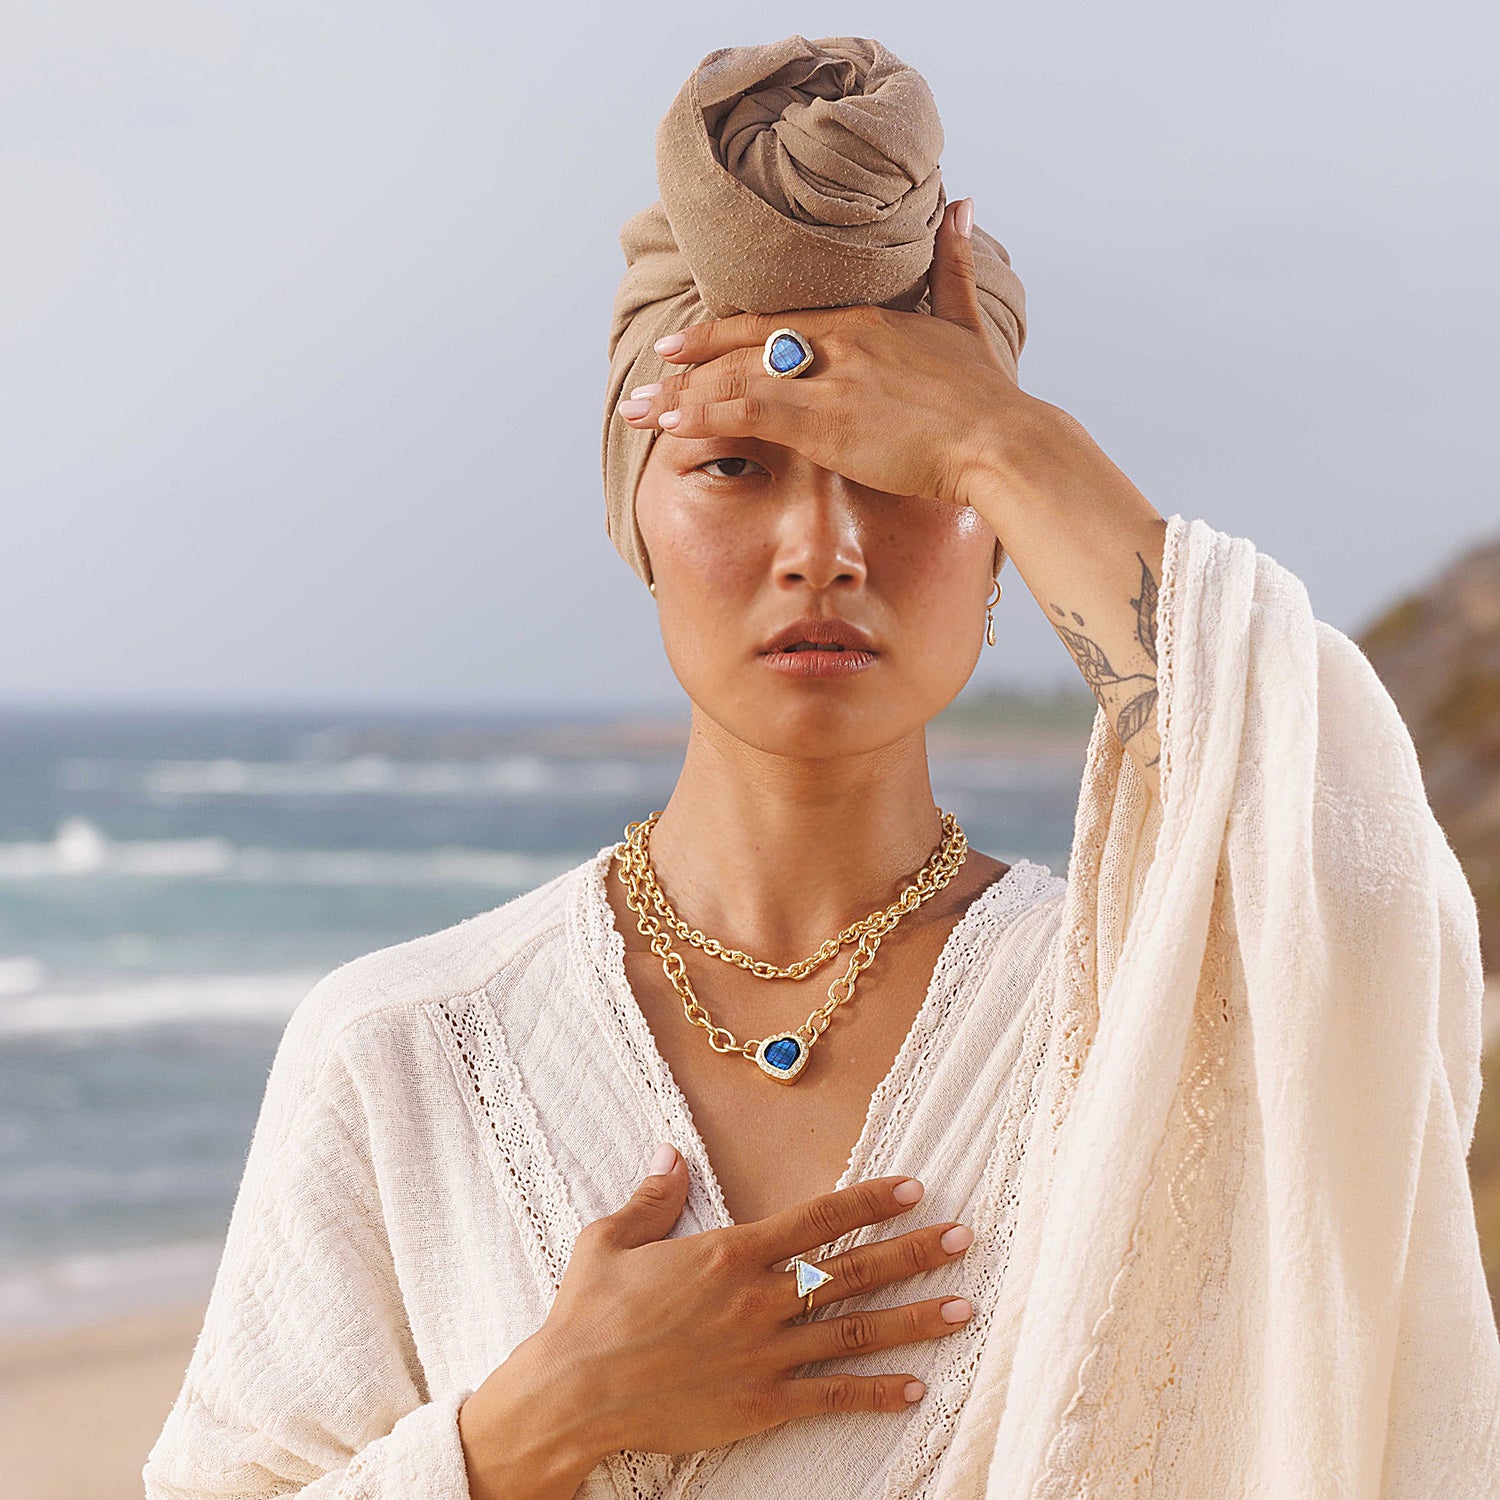 Inanna Links Necklace - Labradorite &amp; Diamonds - Danielle Gerber Freedom Jewelry